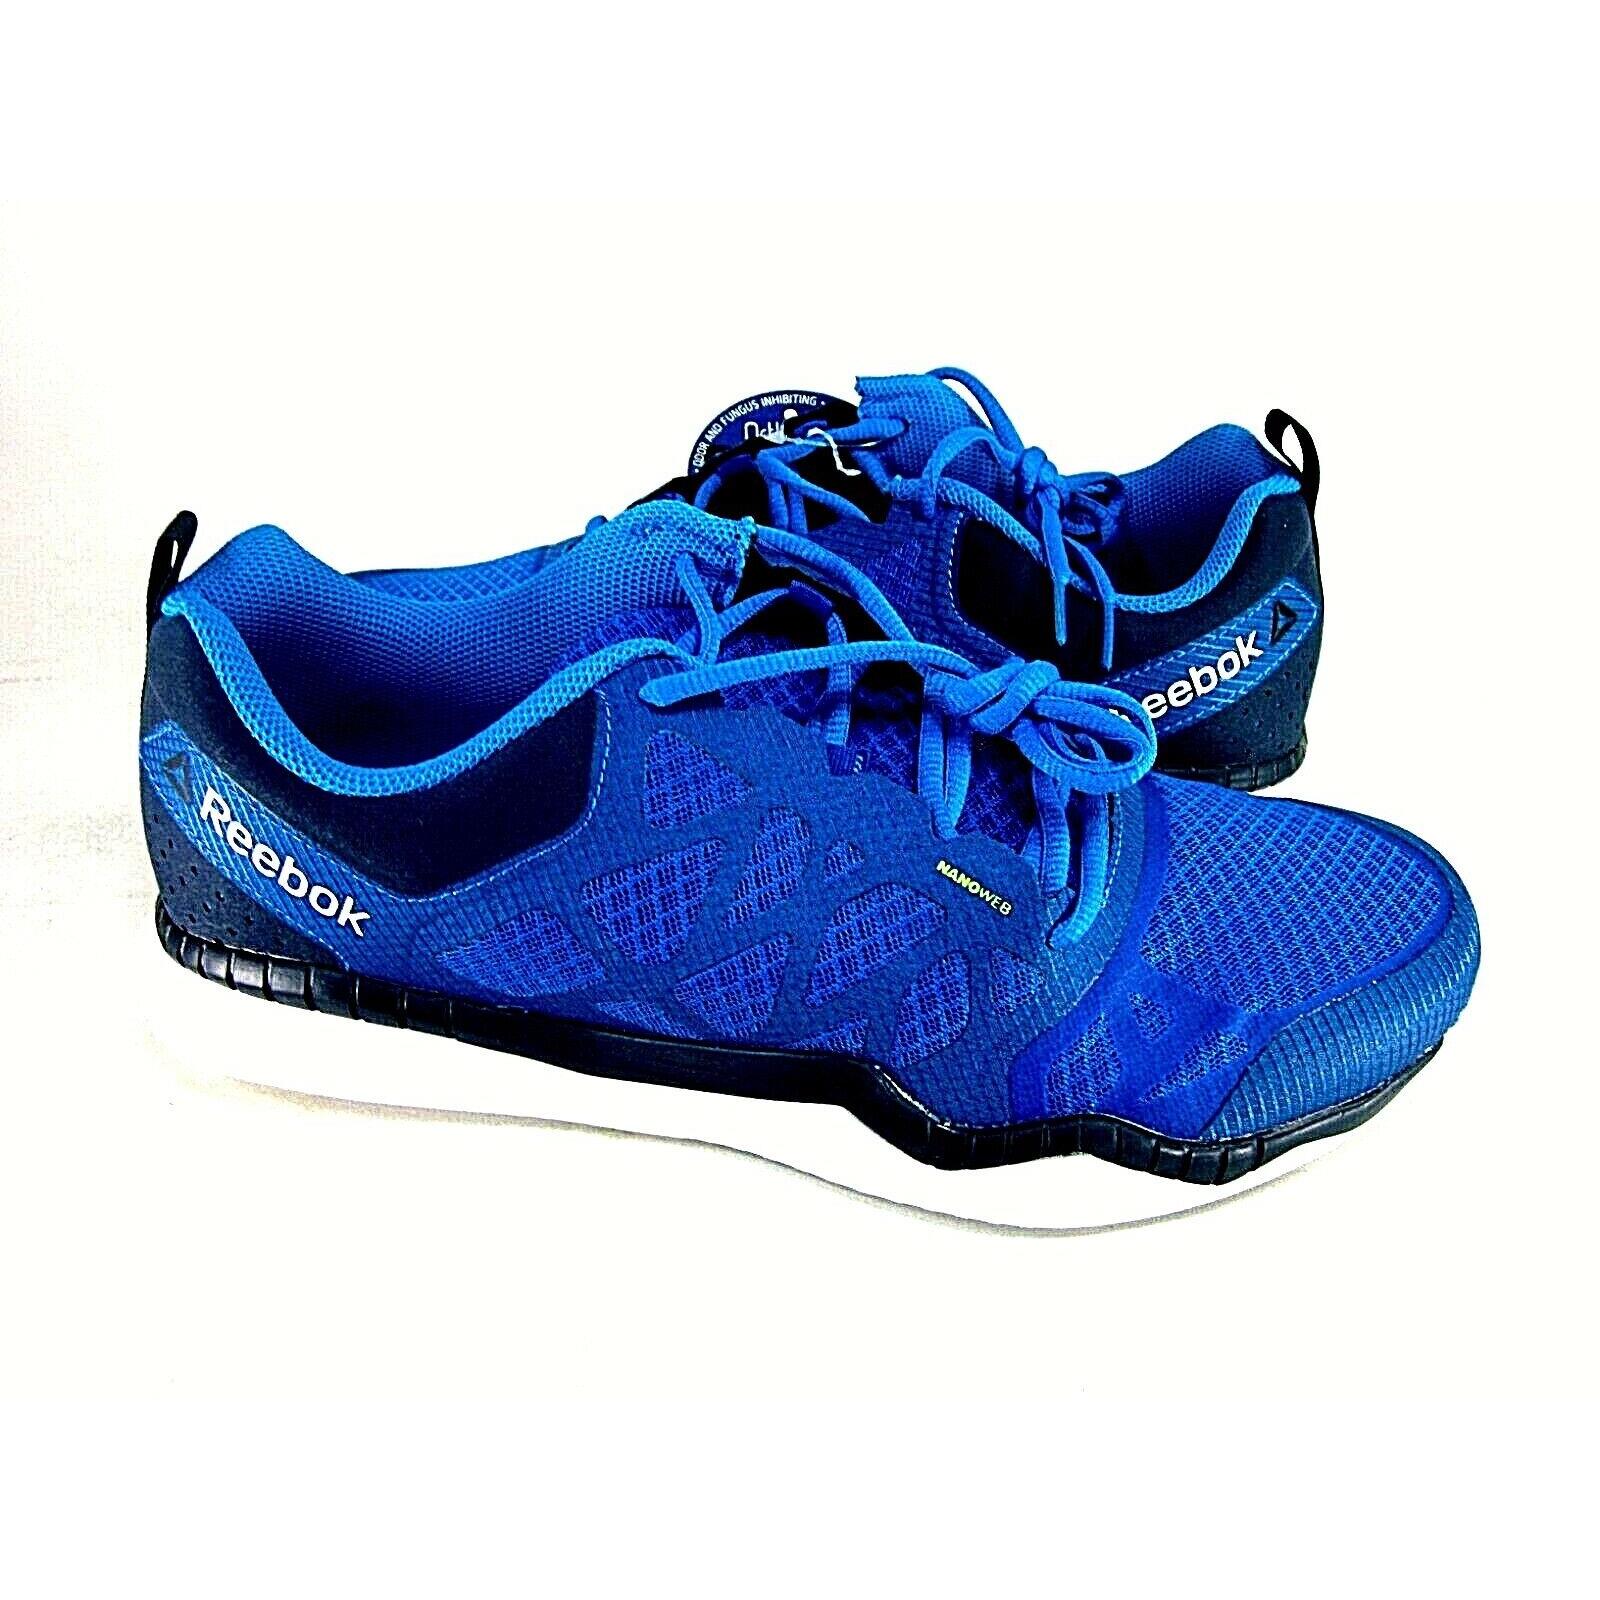 Reebok Men`s Zprint Training Shoes BD1184 Blue/navy/white US Size 9 M